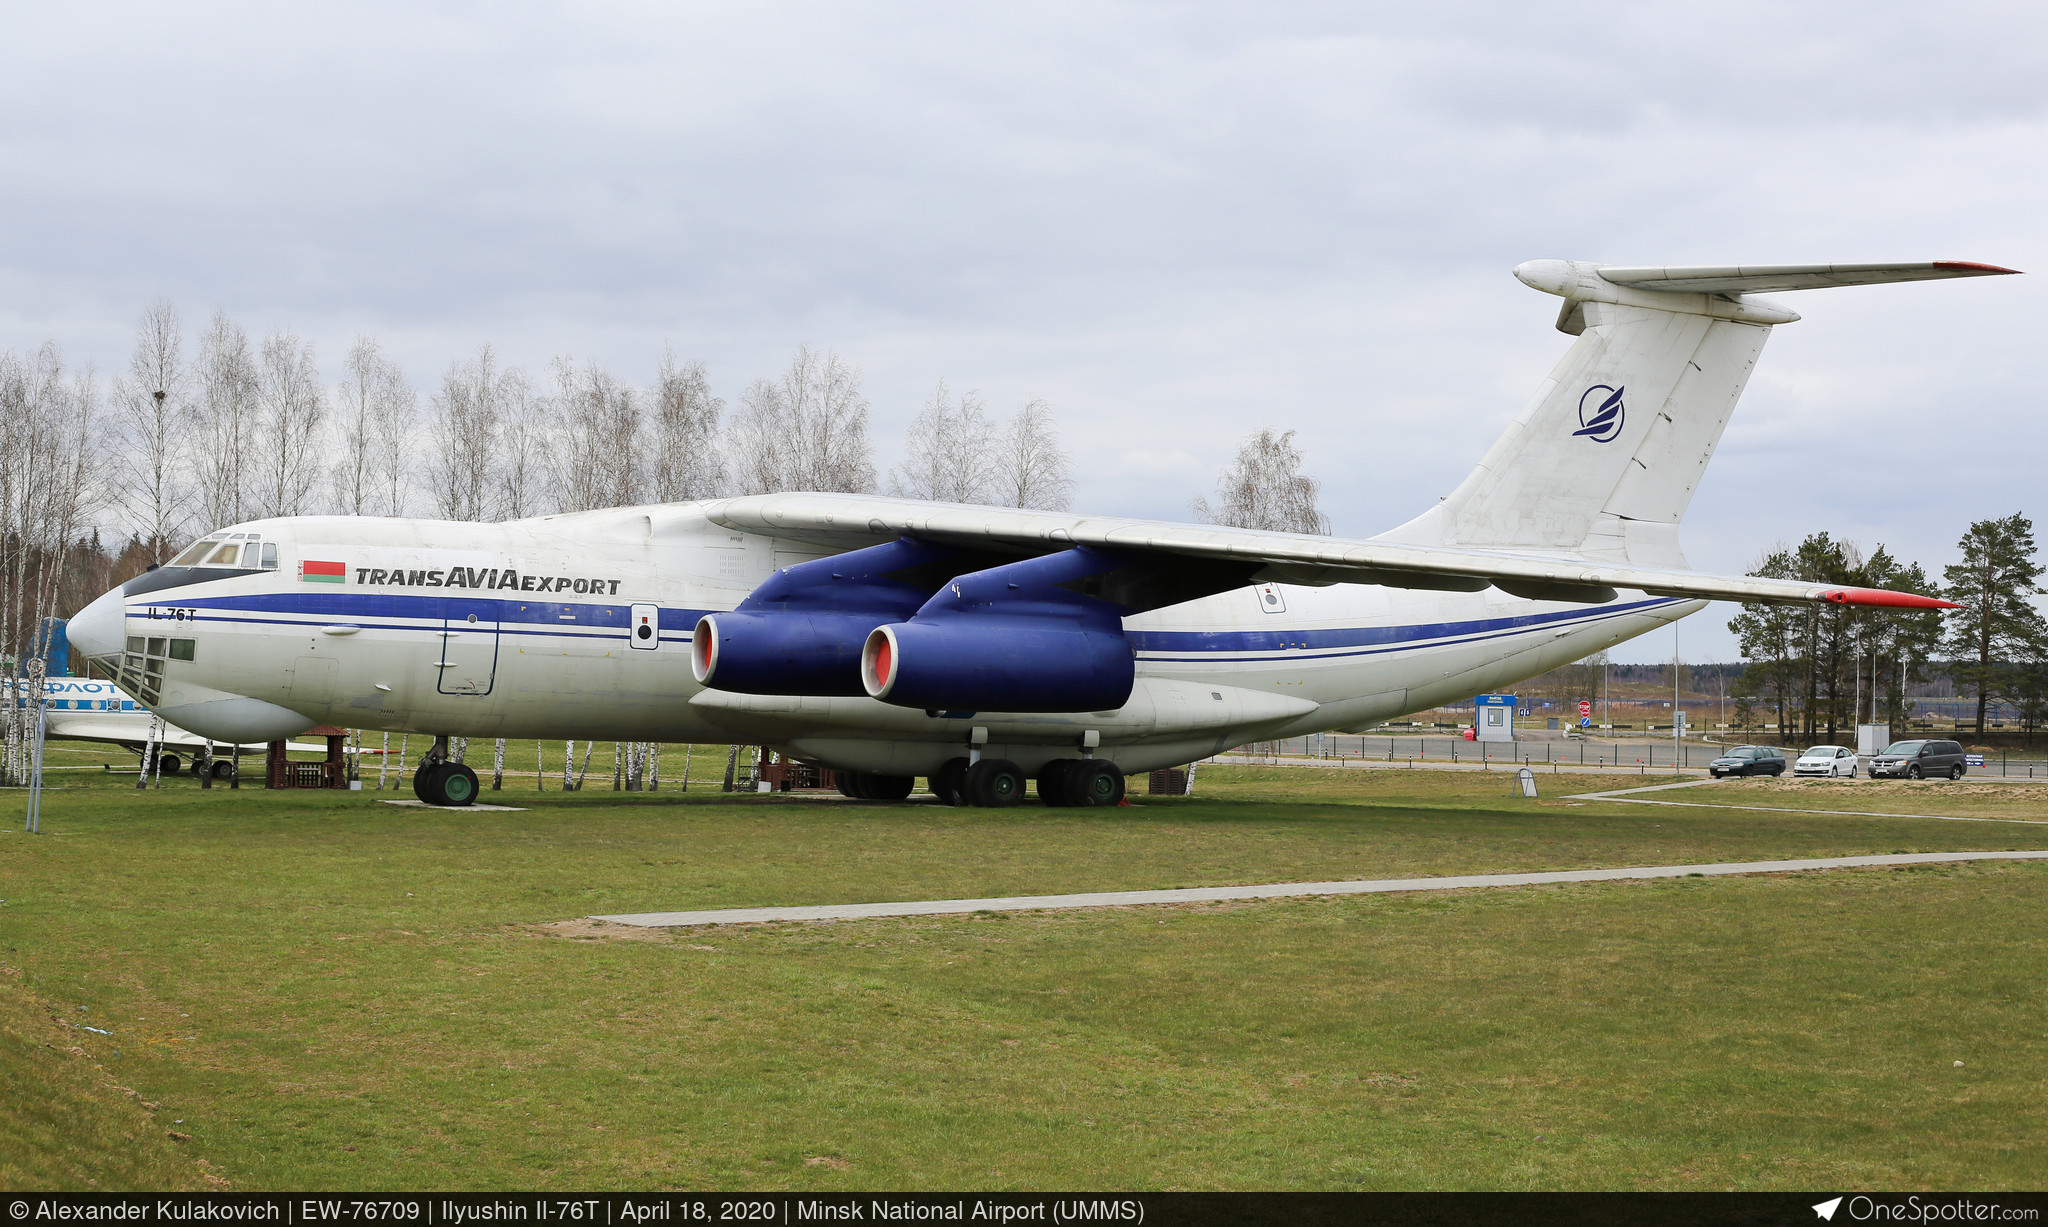 EW-76709 Transaviaexport Cargo Airline Ilyushin Il-76T, MSN